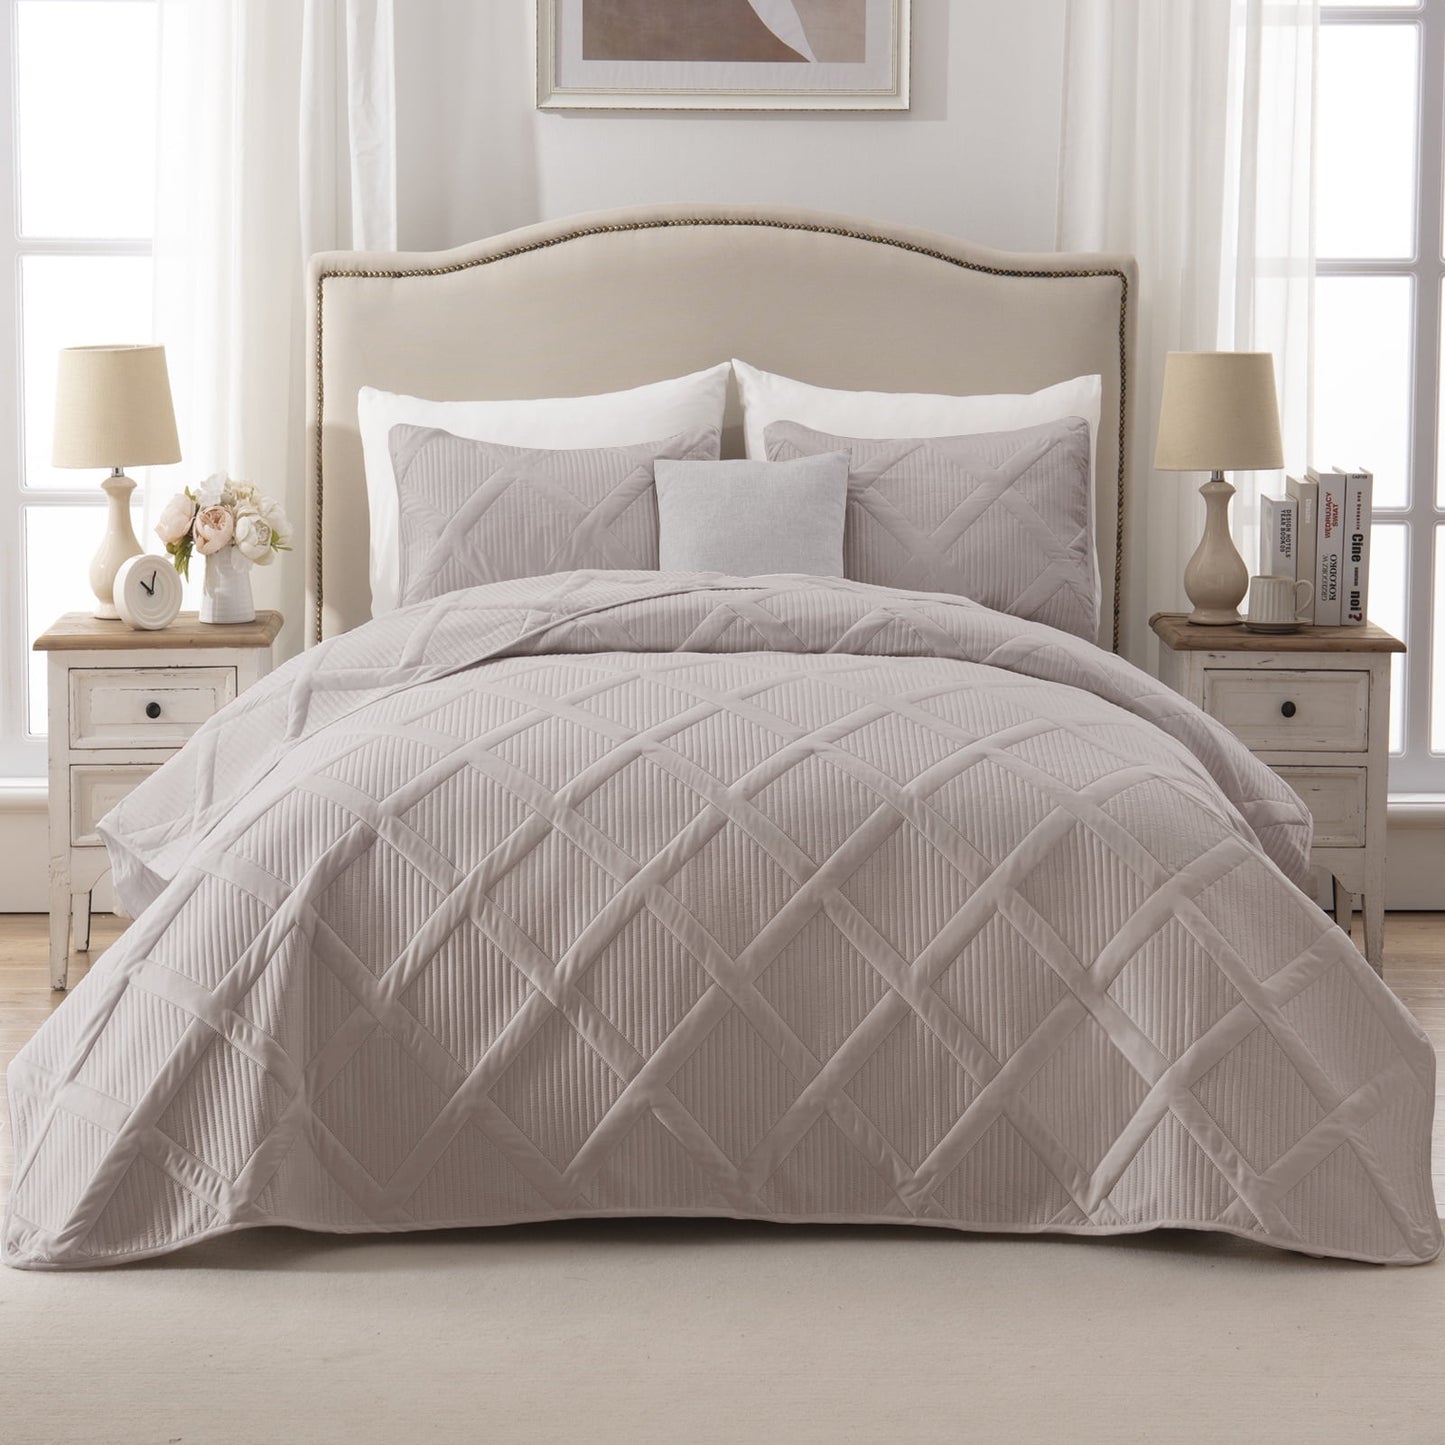 Exclusivo Mezcla Ultrasonic California King Quilt Set, Lightweight Bedspreads Modern Striped Coverlet with 2 Pillow Shams, Light Grey